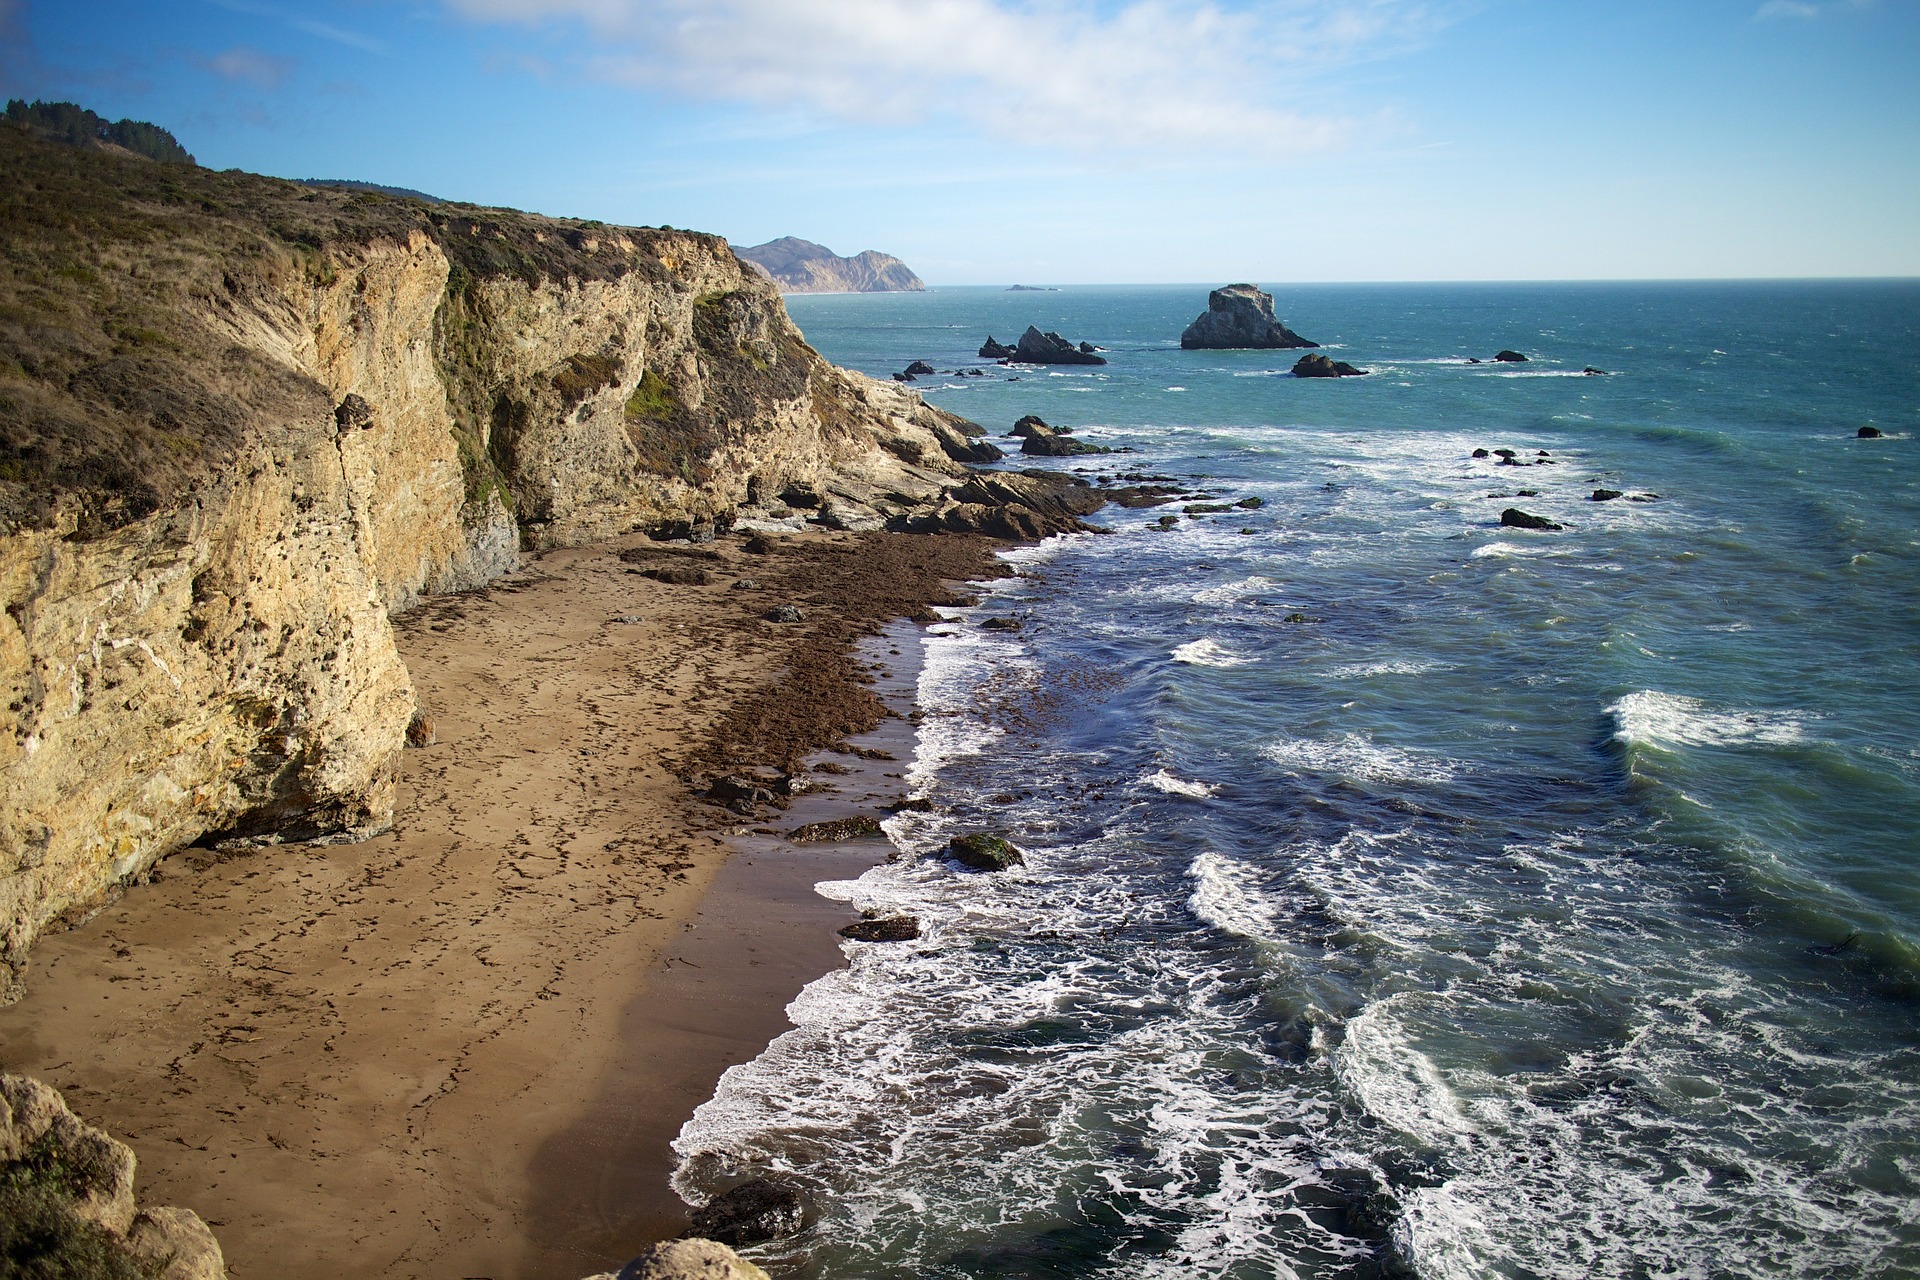 16 california road trip ideas from a california girl (photos